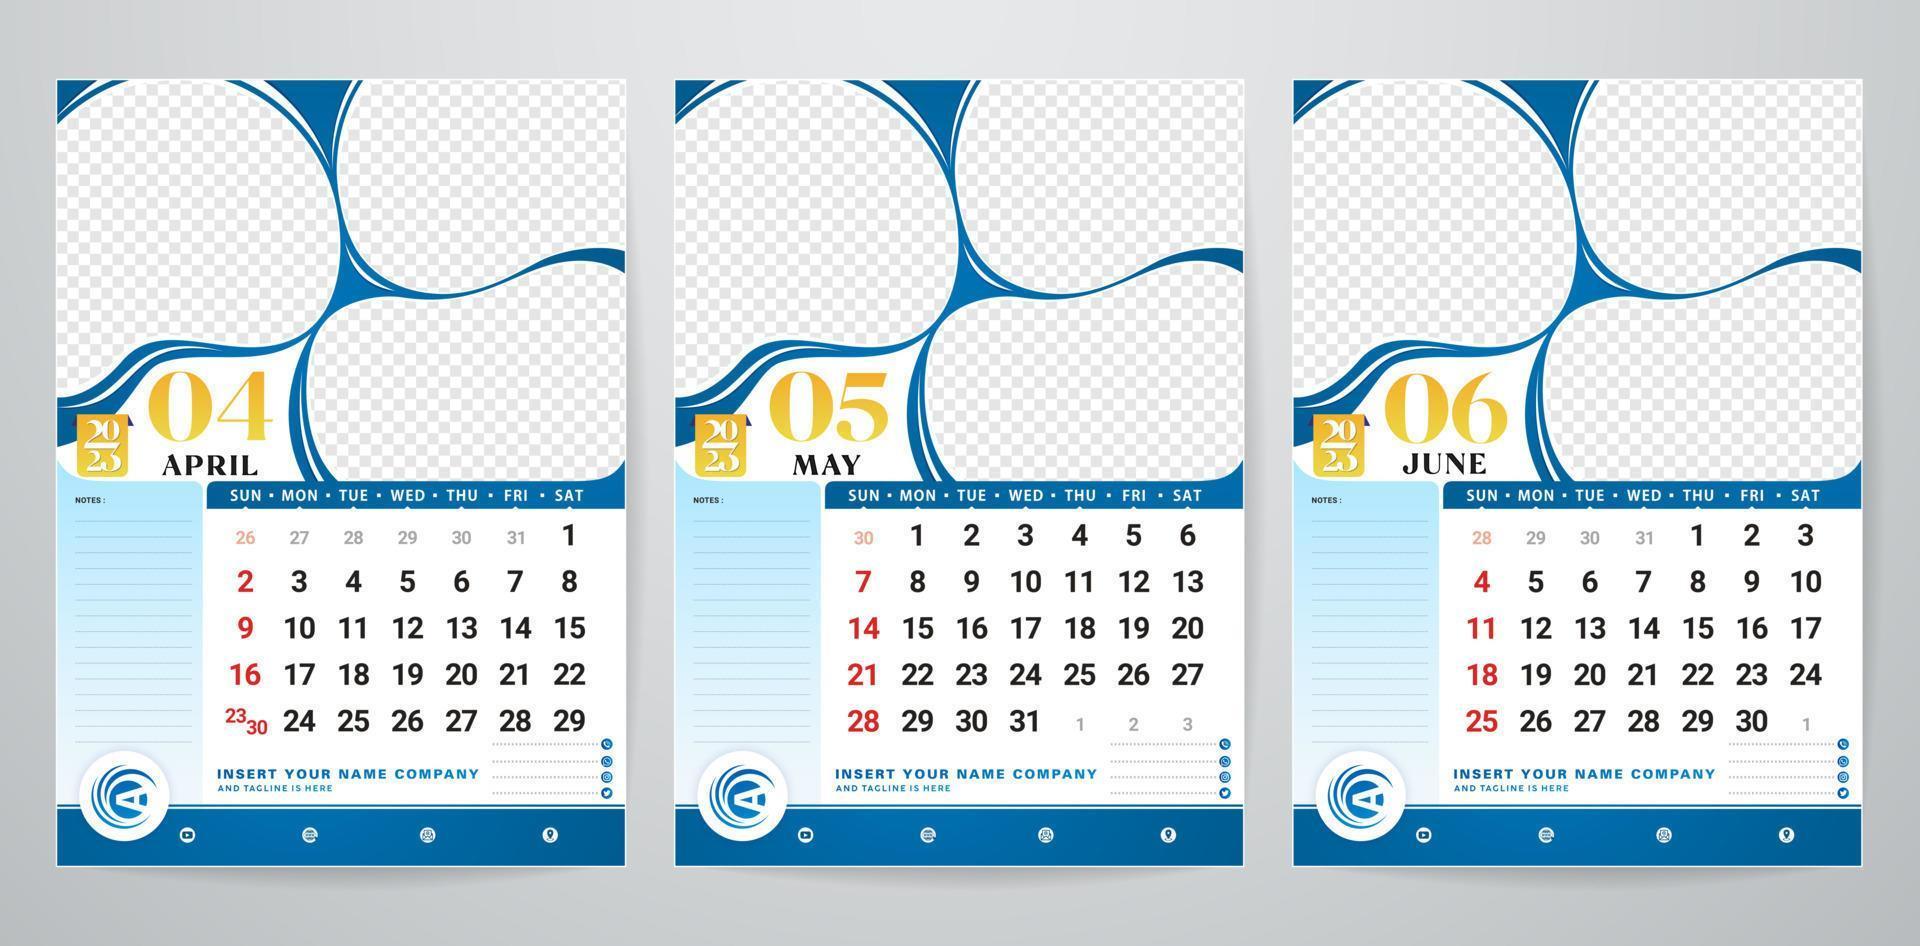 abril, mayo, junio de 2023 plantillas de calendario conceptos tercios meses establecidos para planificador de oficina, plantilla de planificador de diseño corporativo. conceptos de calendario de eventos, catálogo de proyectos mínimos, listo para imprimir en papel vector